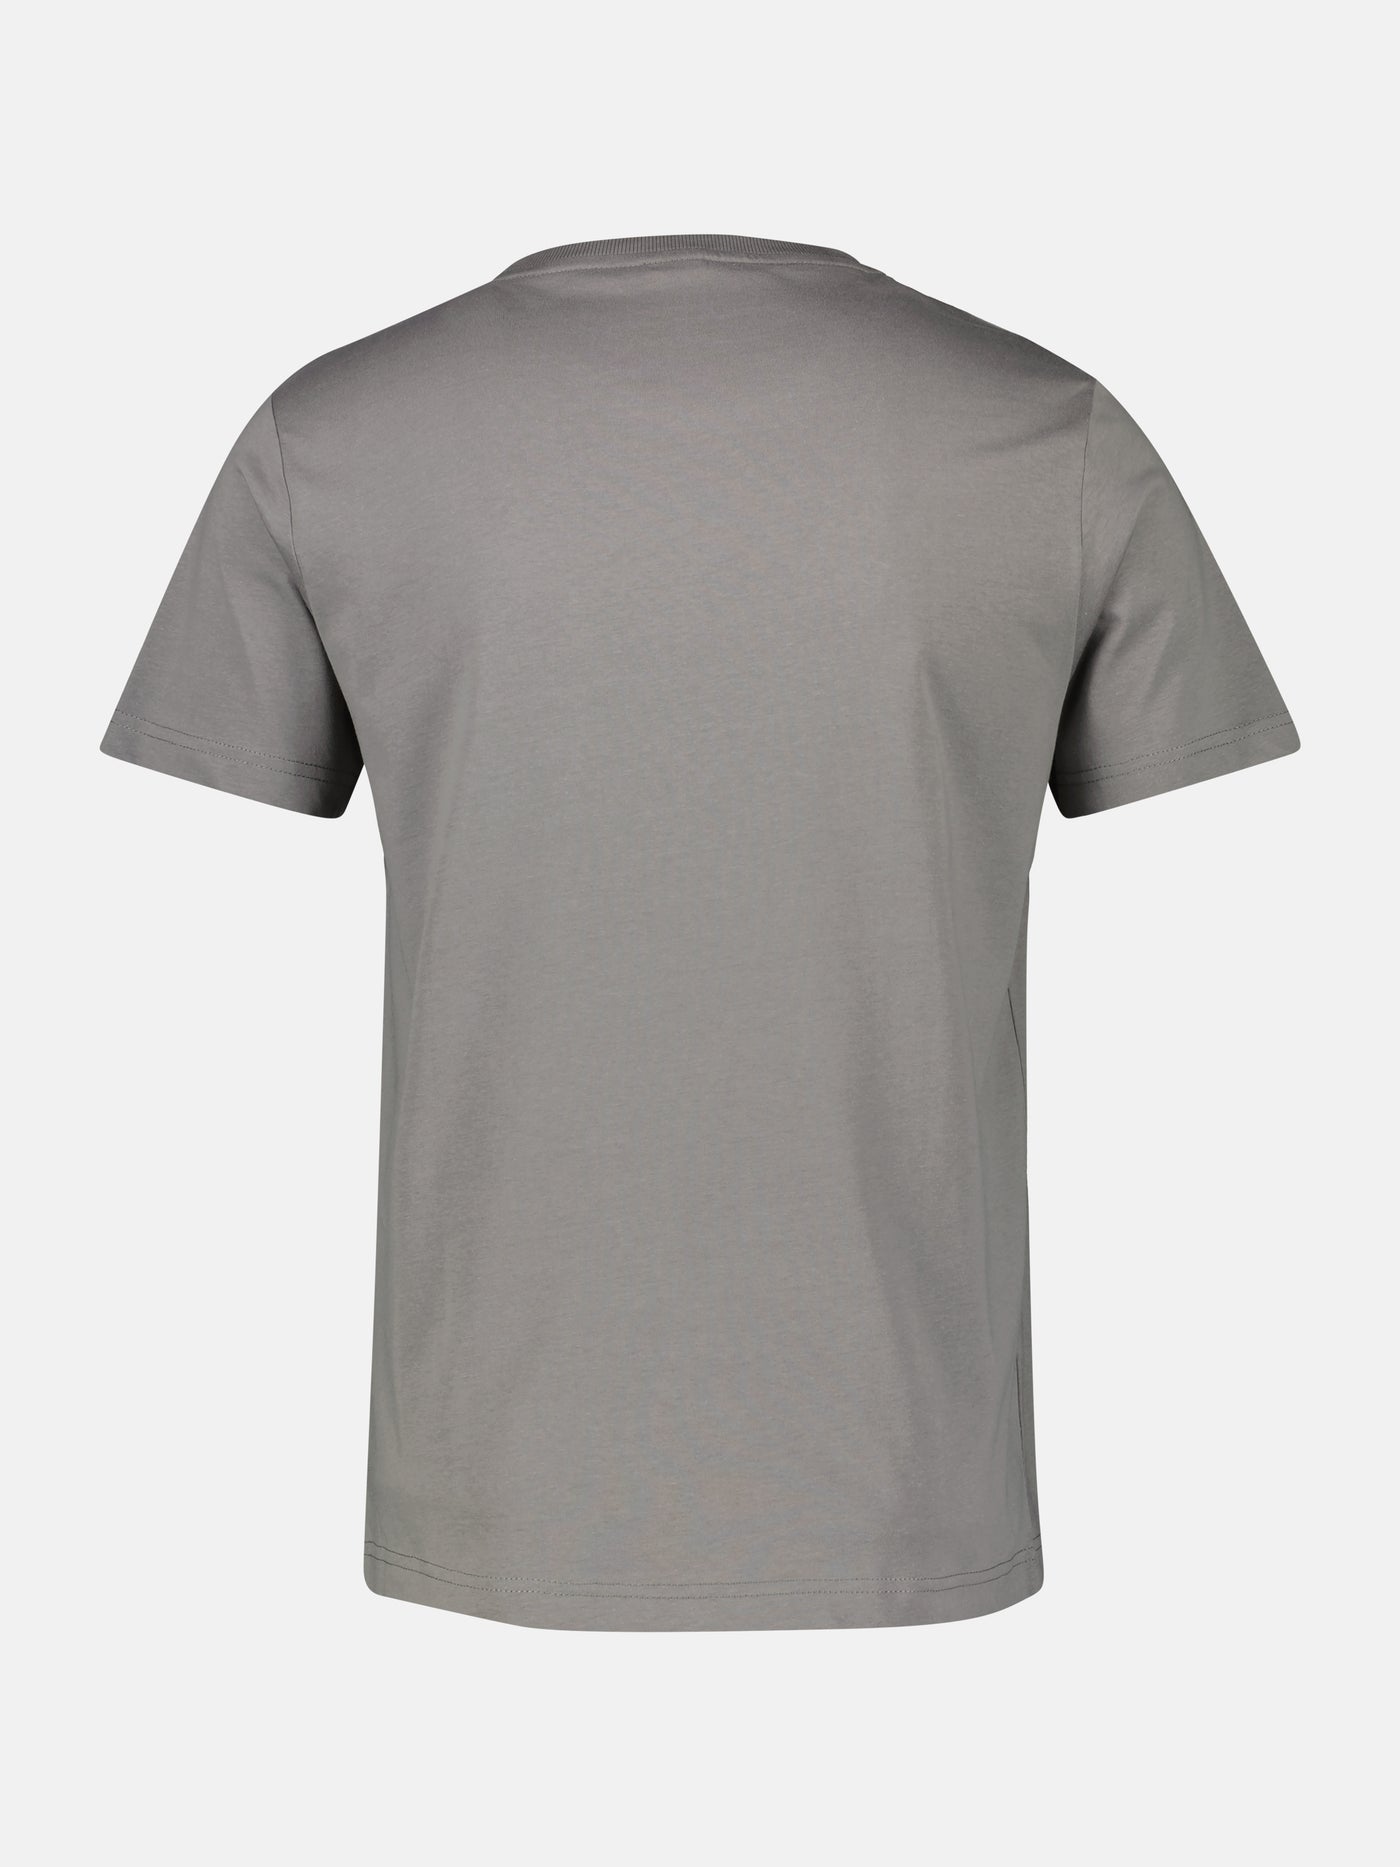 Herren T-Shirt mit Brust-Print